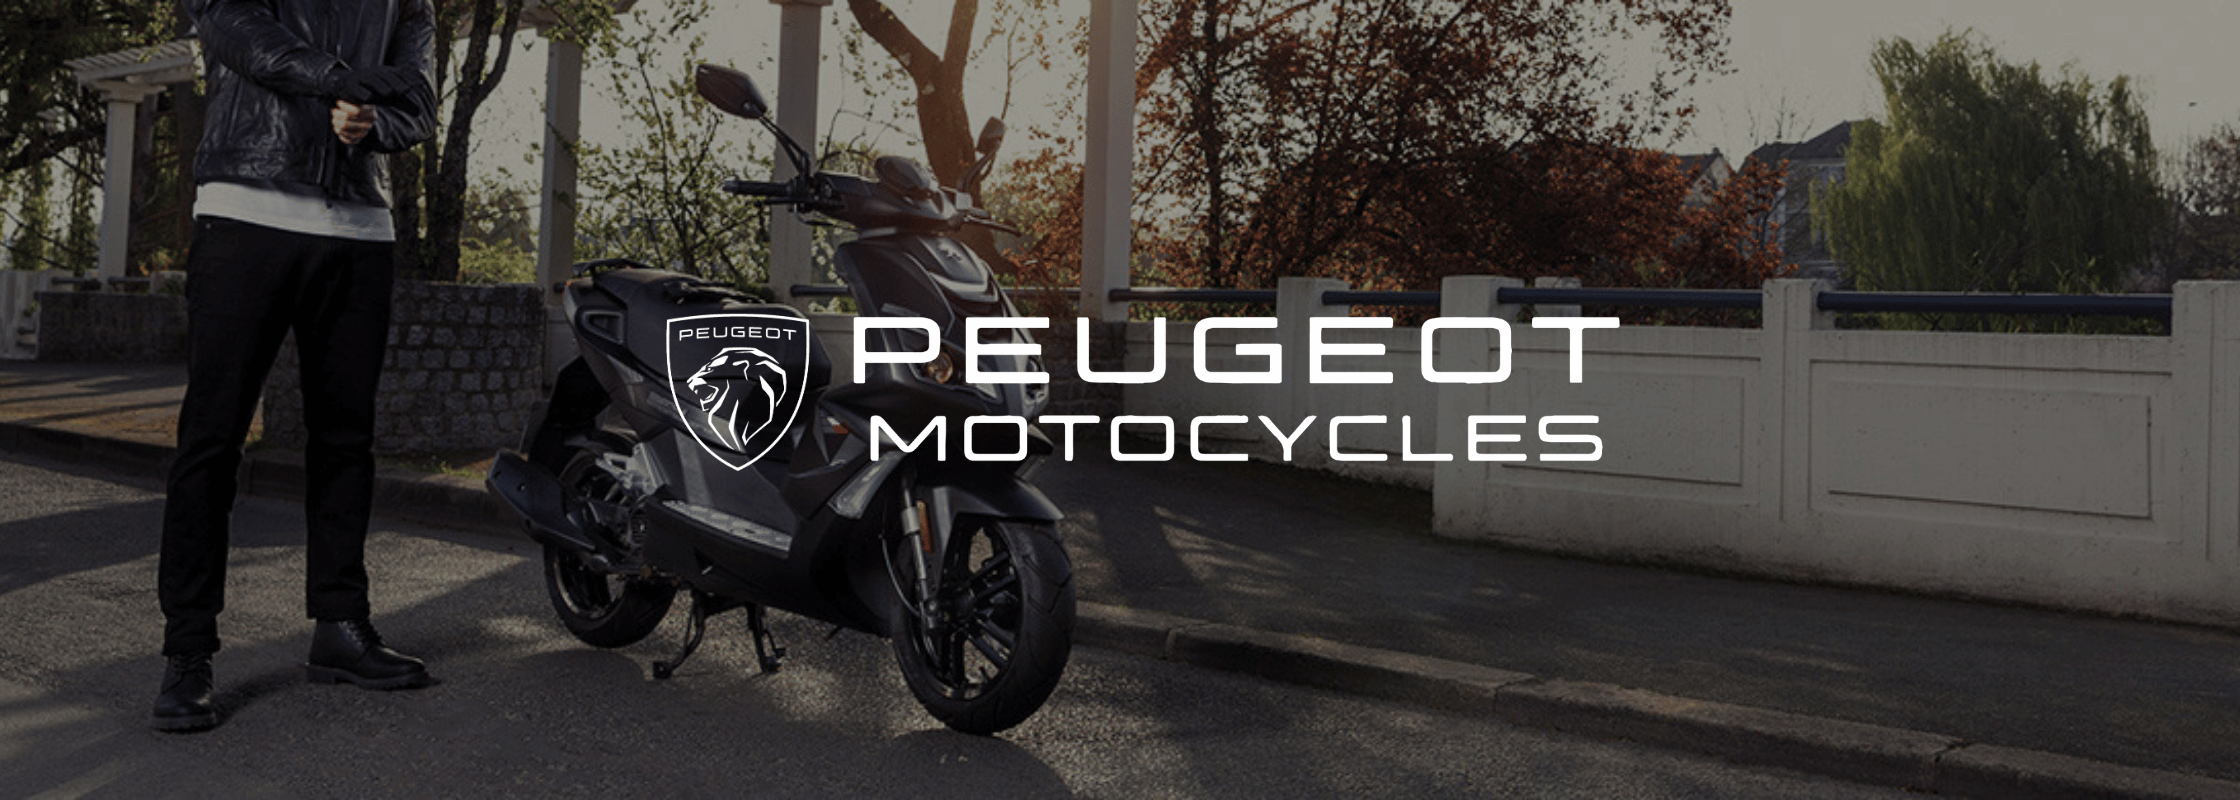 Peugeot Motorcycles 400cc